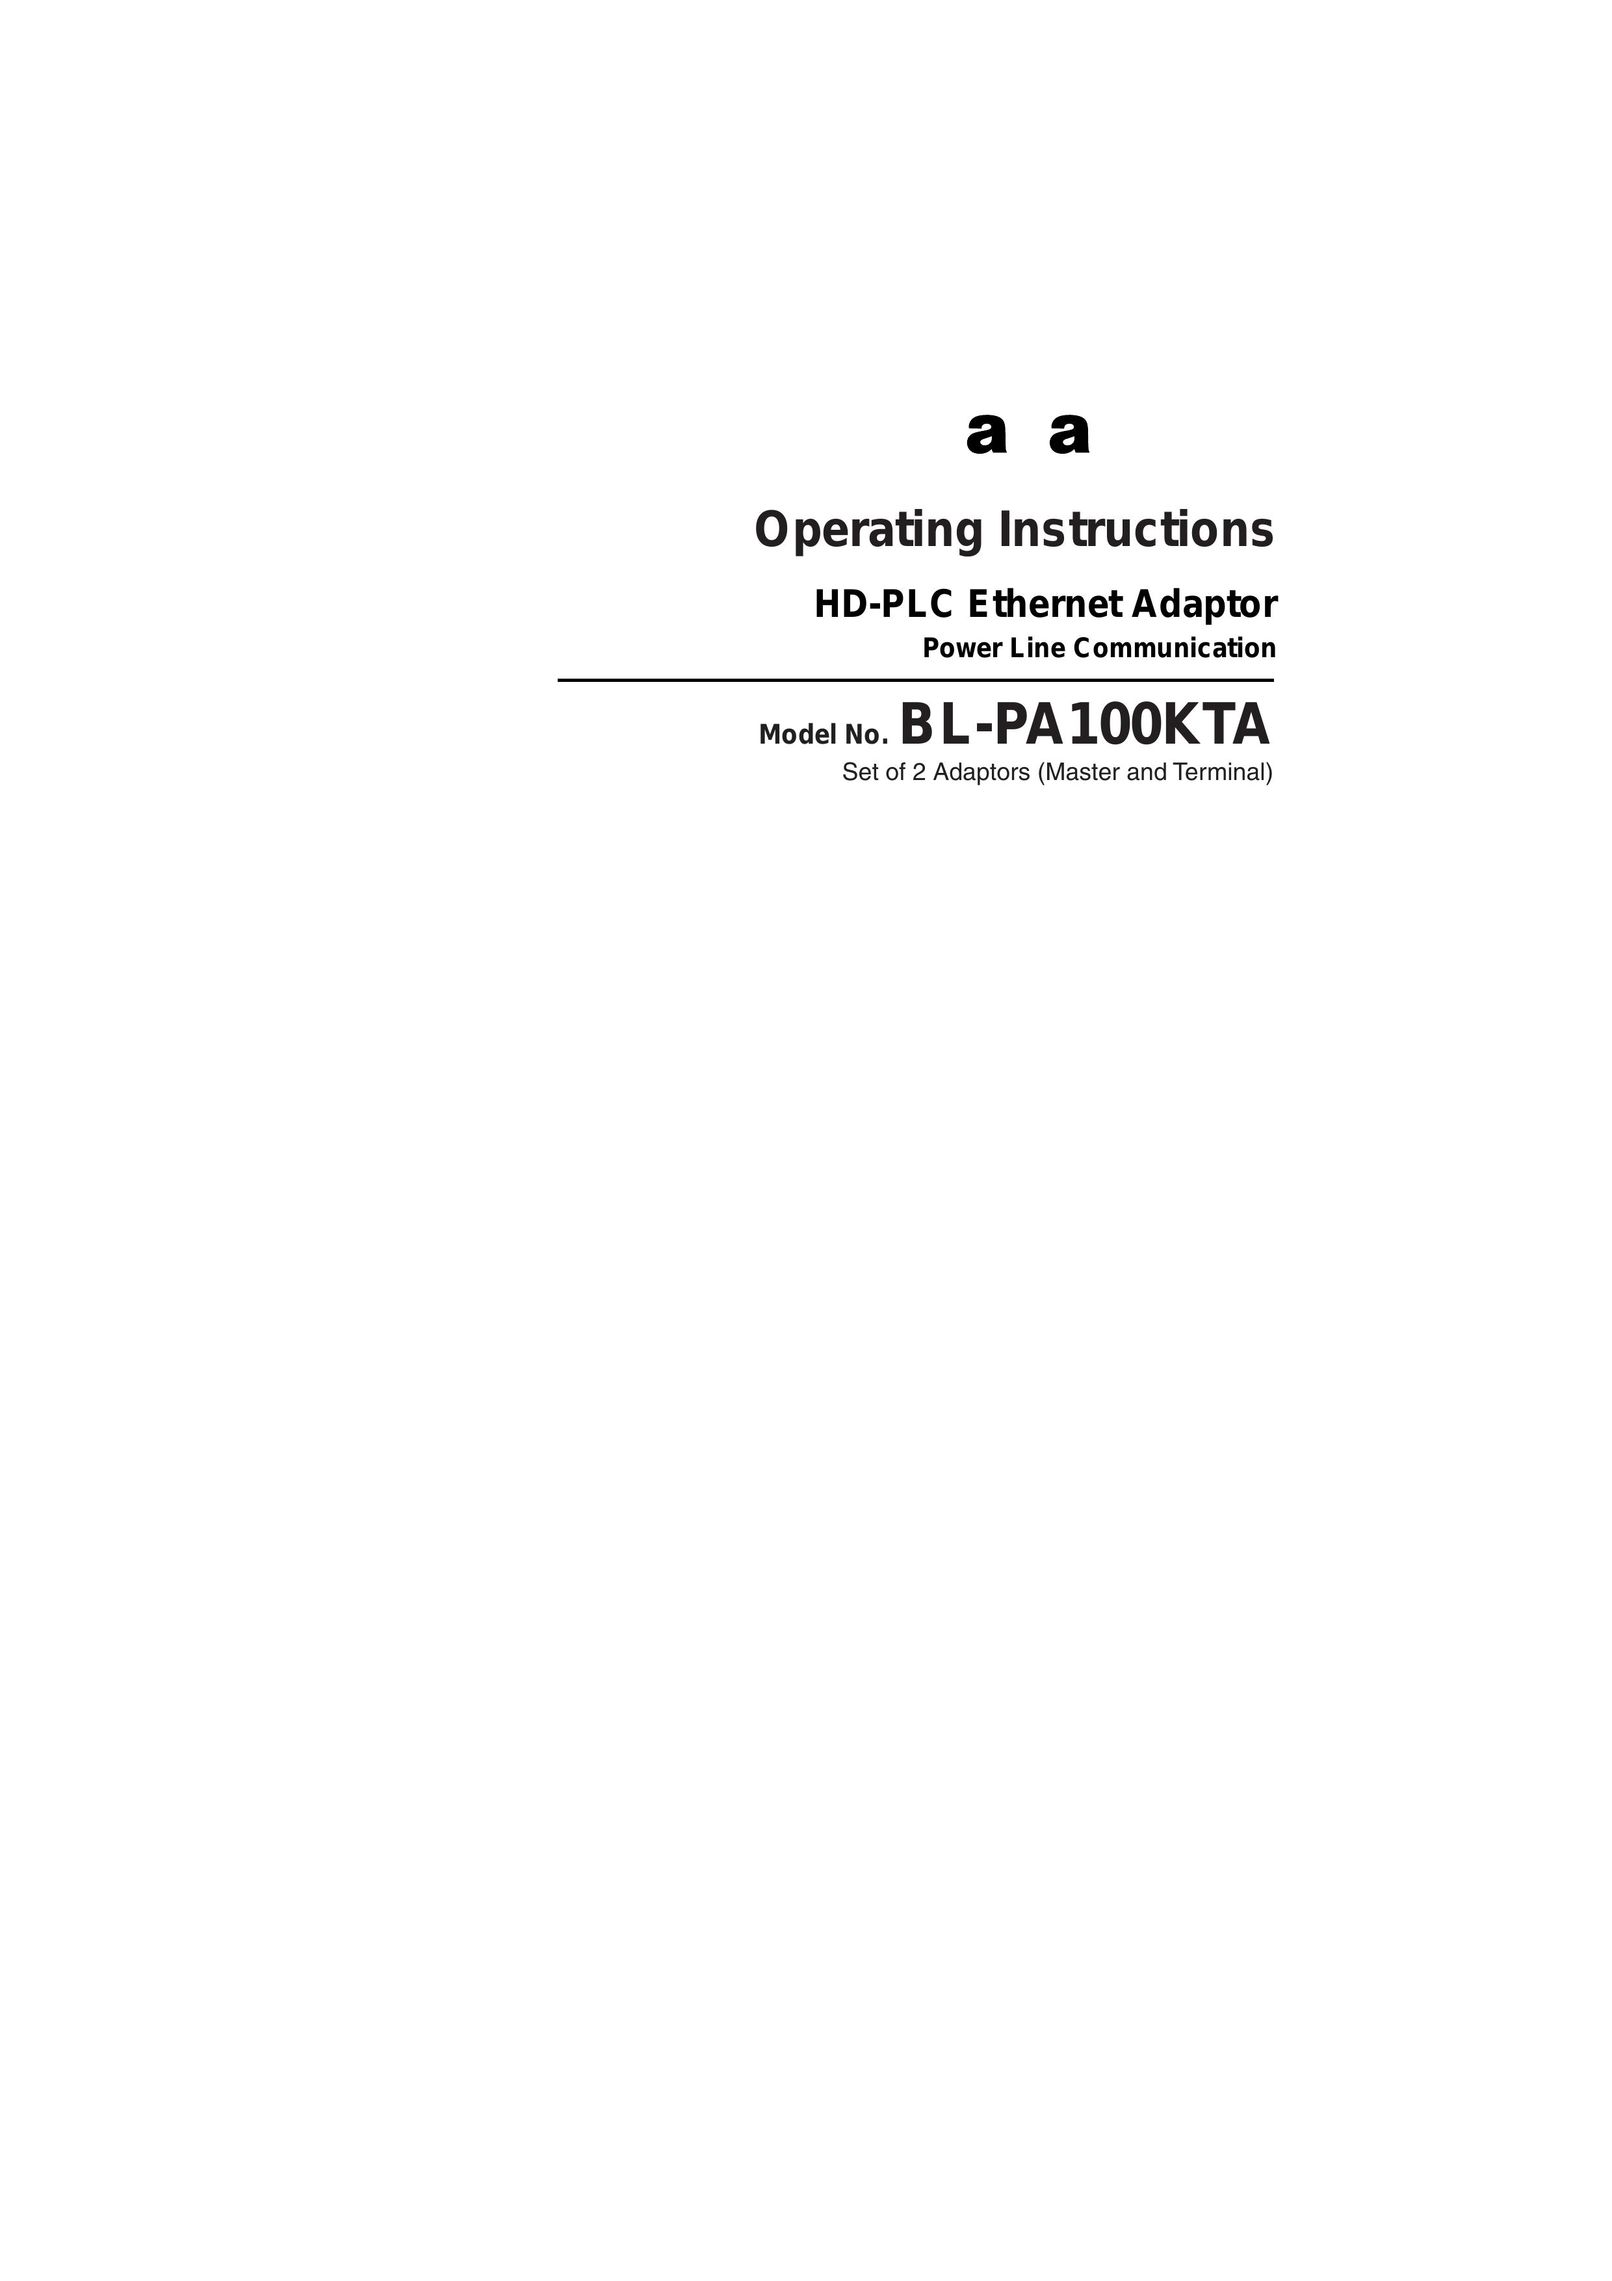 Panasonic BL-PA100KTA Network Router User Manual